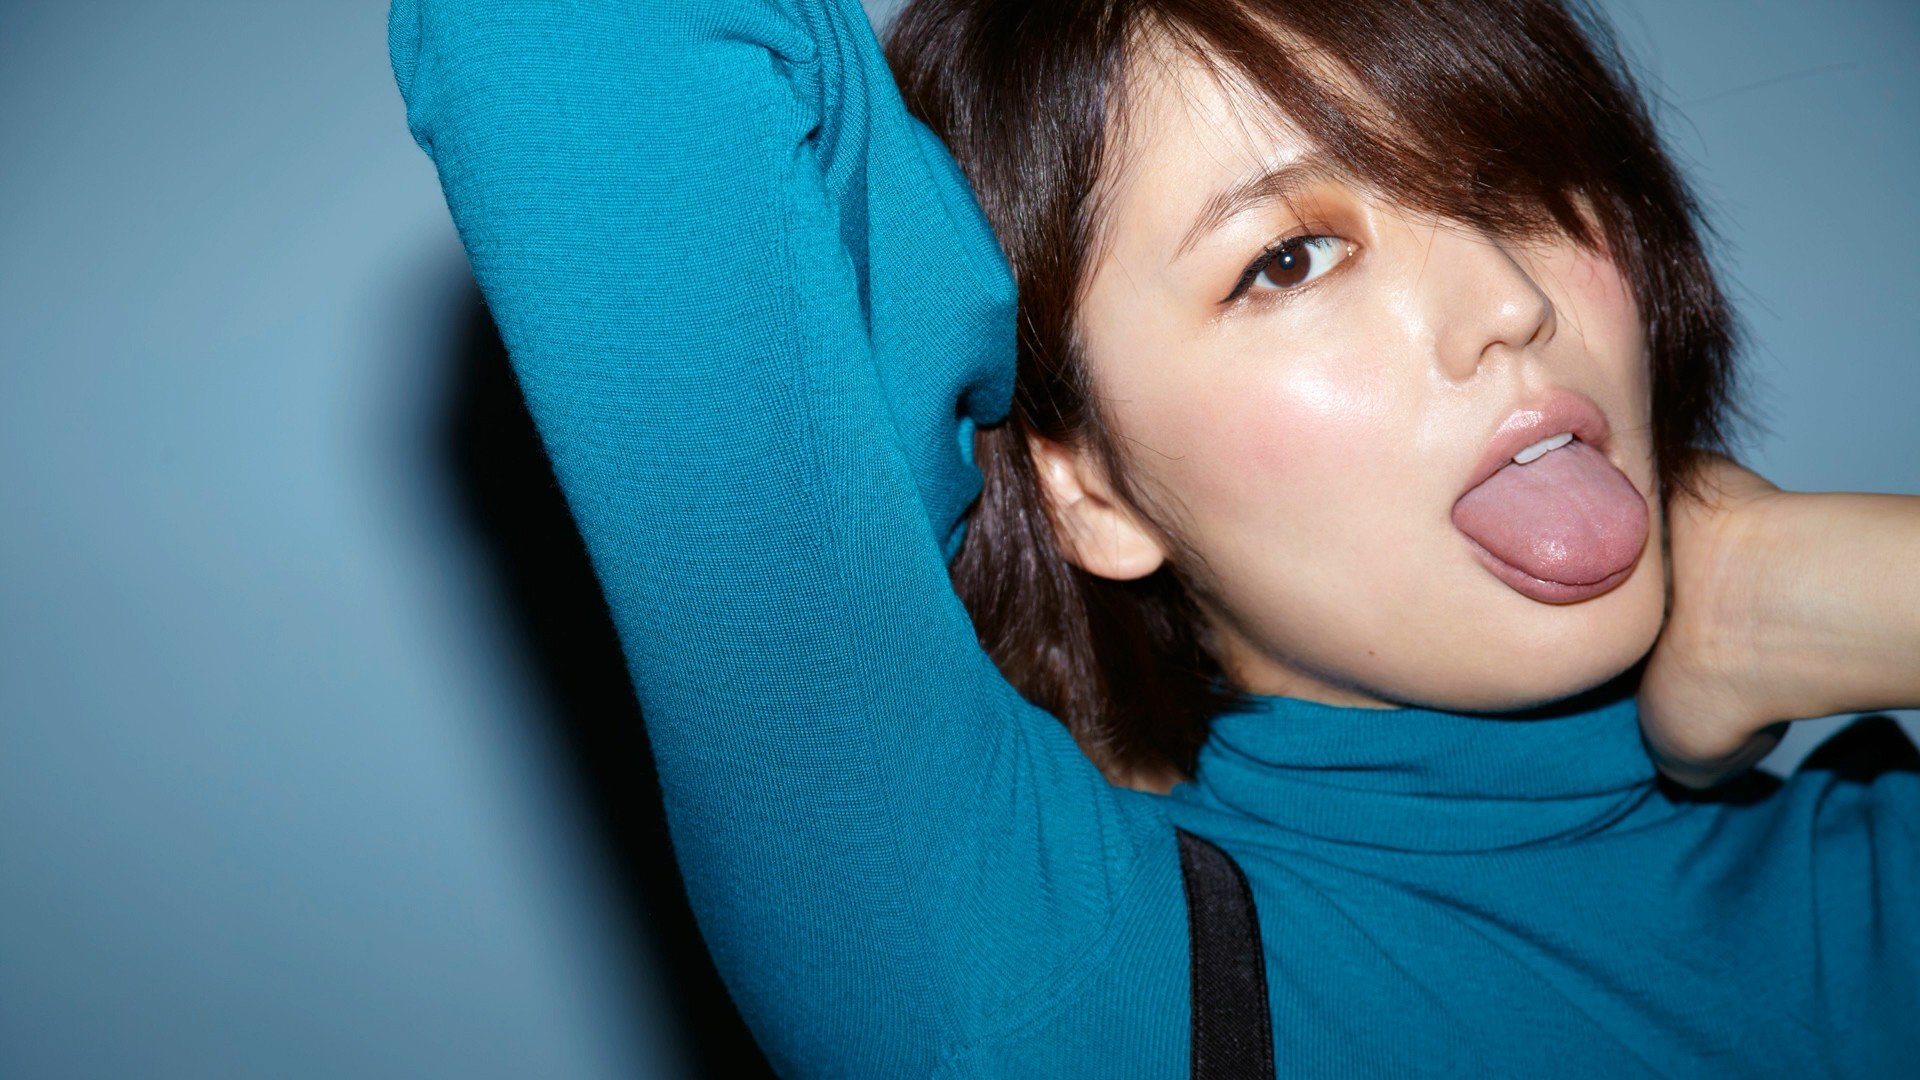 Masami Nagasawa, Tongues, Asian, Women, Face, Blue background, Short hair, Turtlenecks Wallpaper